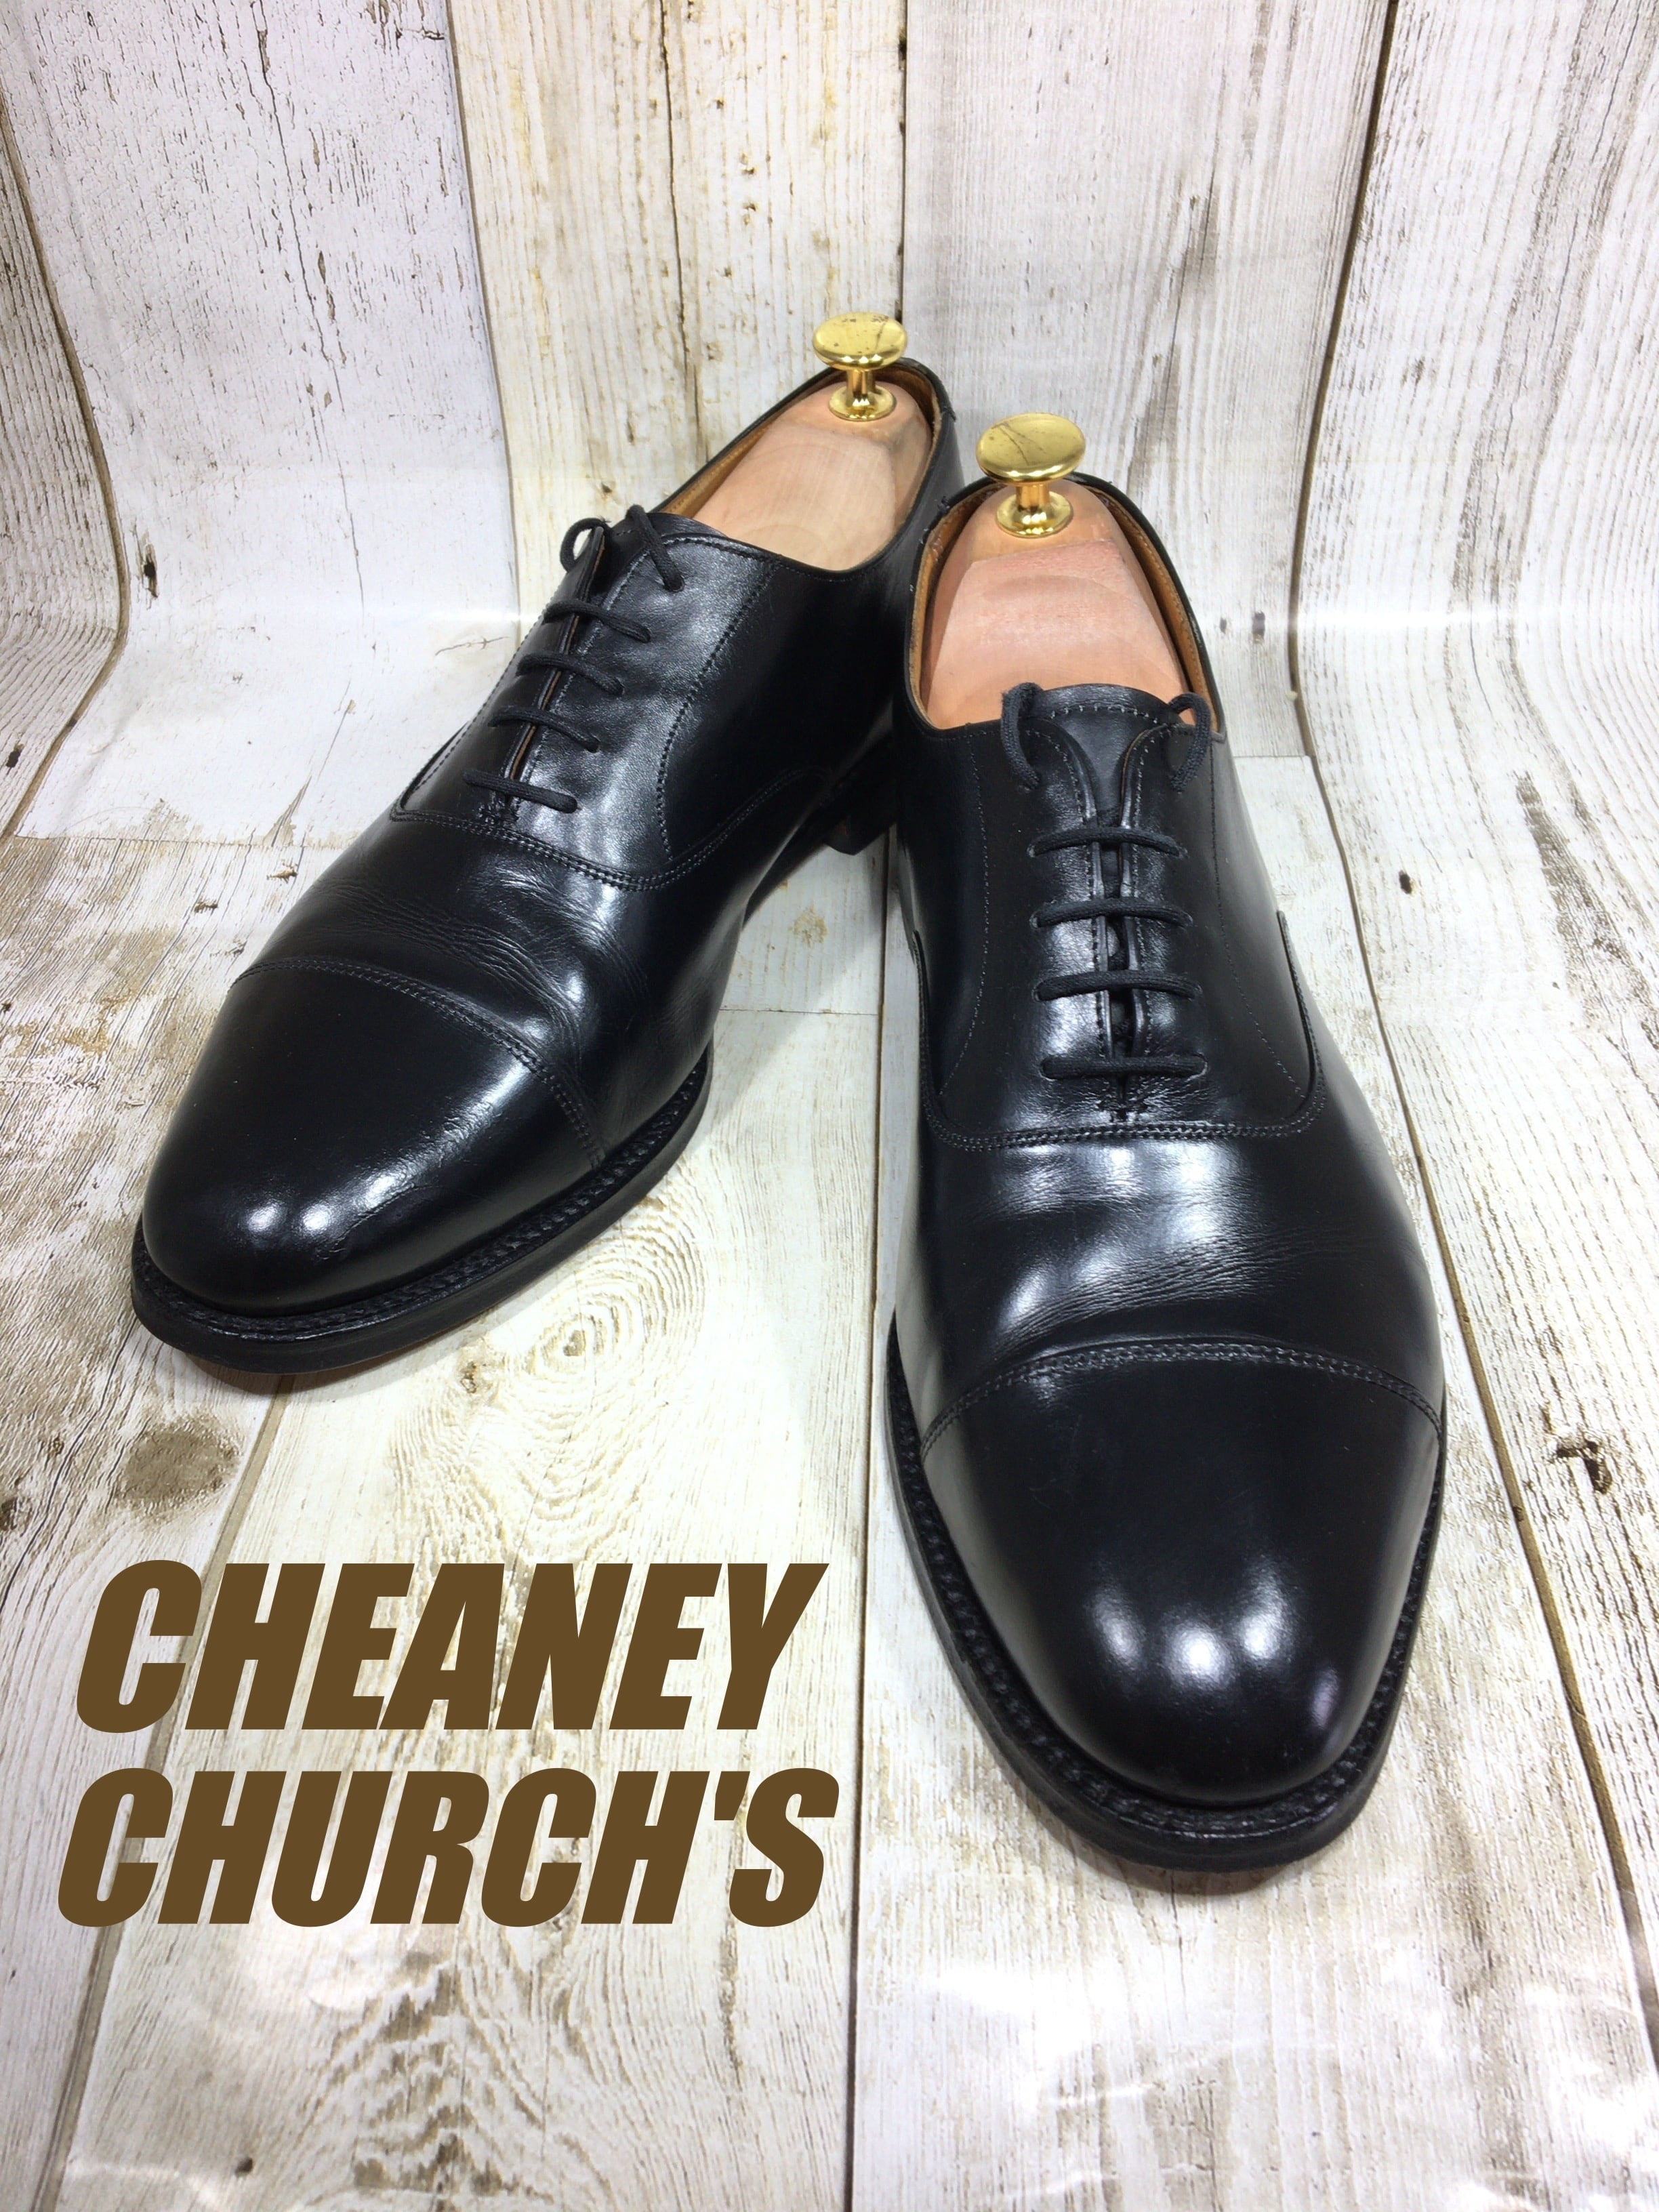 Cheaney チーニー Church's チャーチストレートチップ 26.5cm | 中古靴・革靴・ブーツ通販専門店 DafsMart ダフスマート  Online Shop powered by BASE